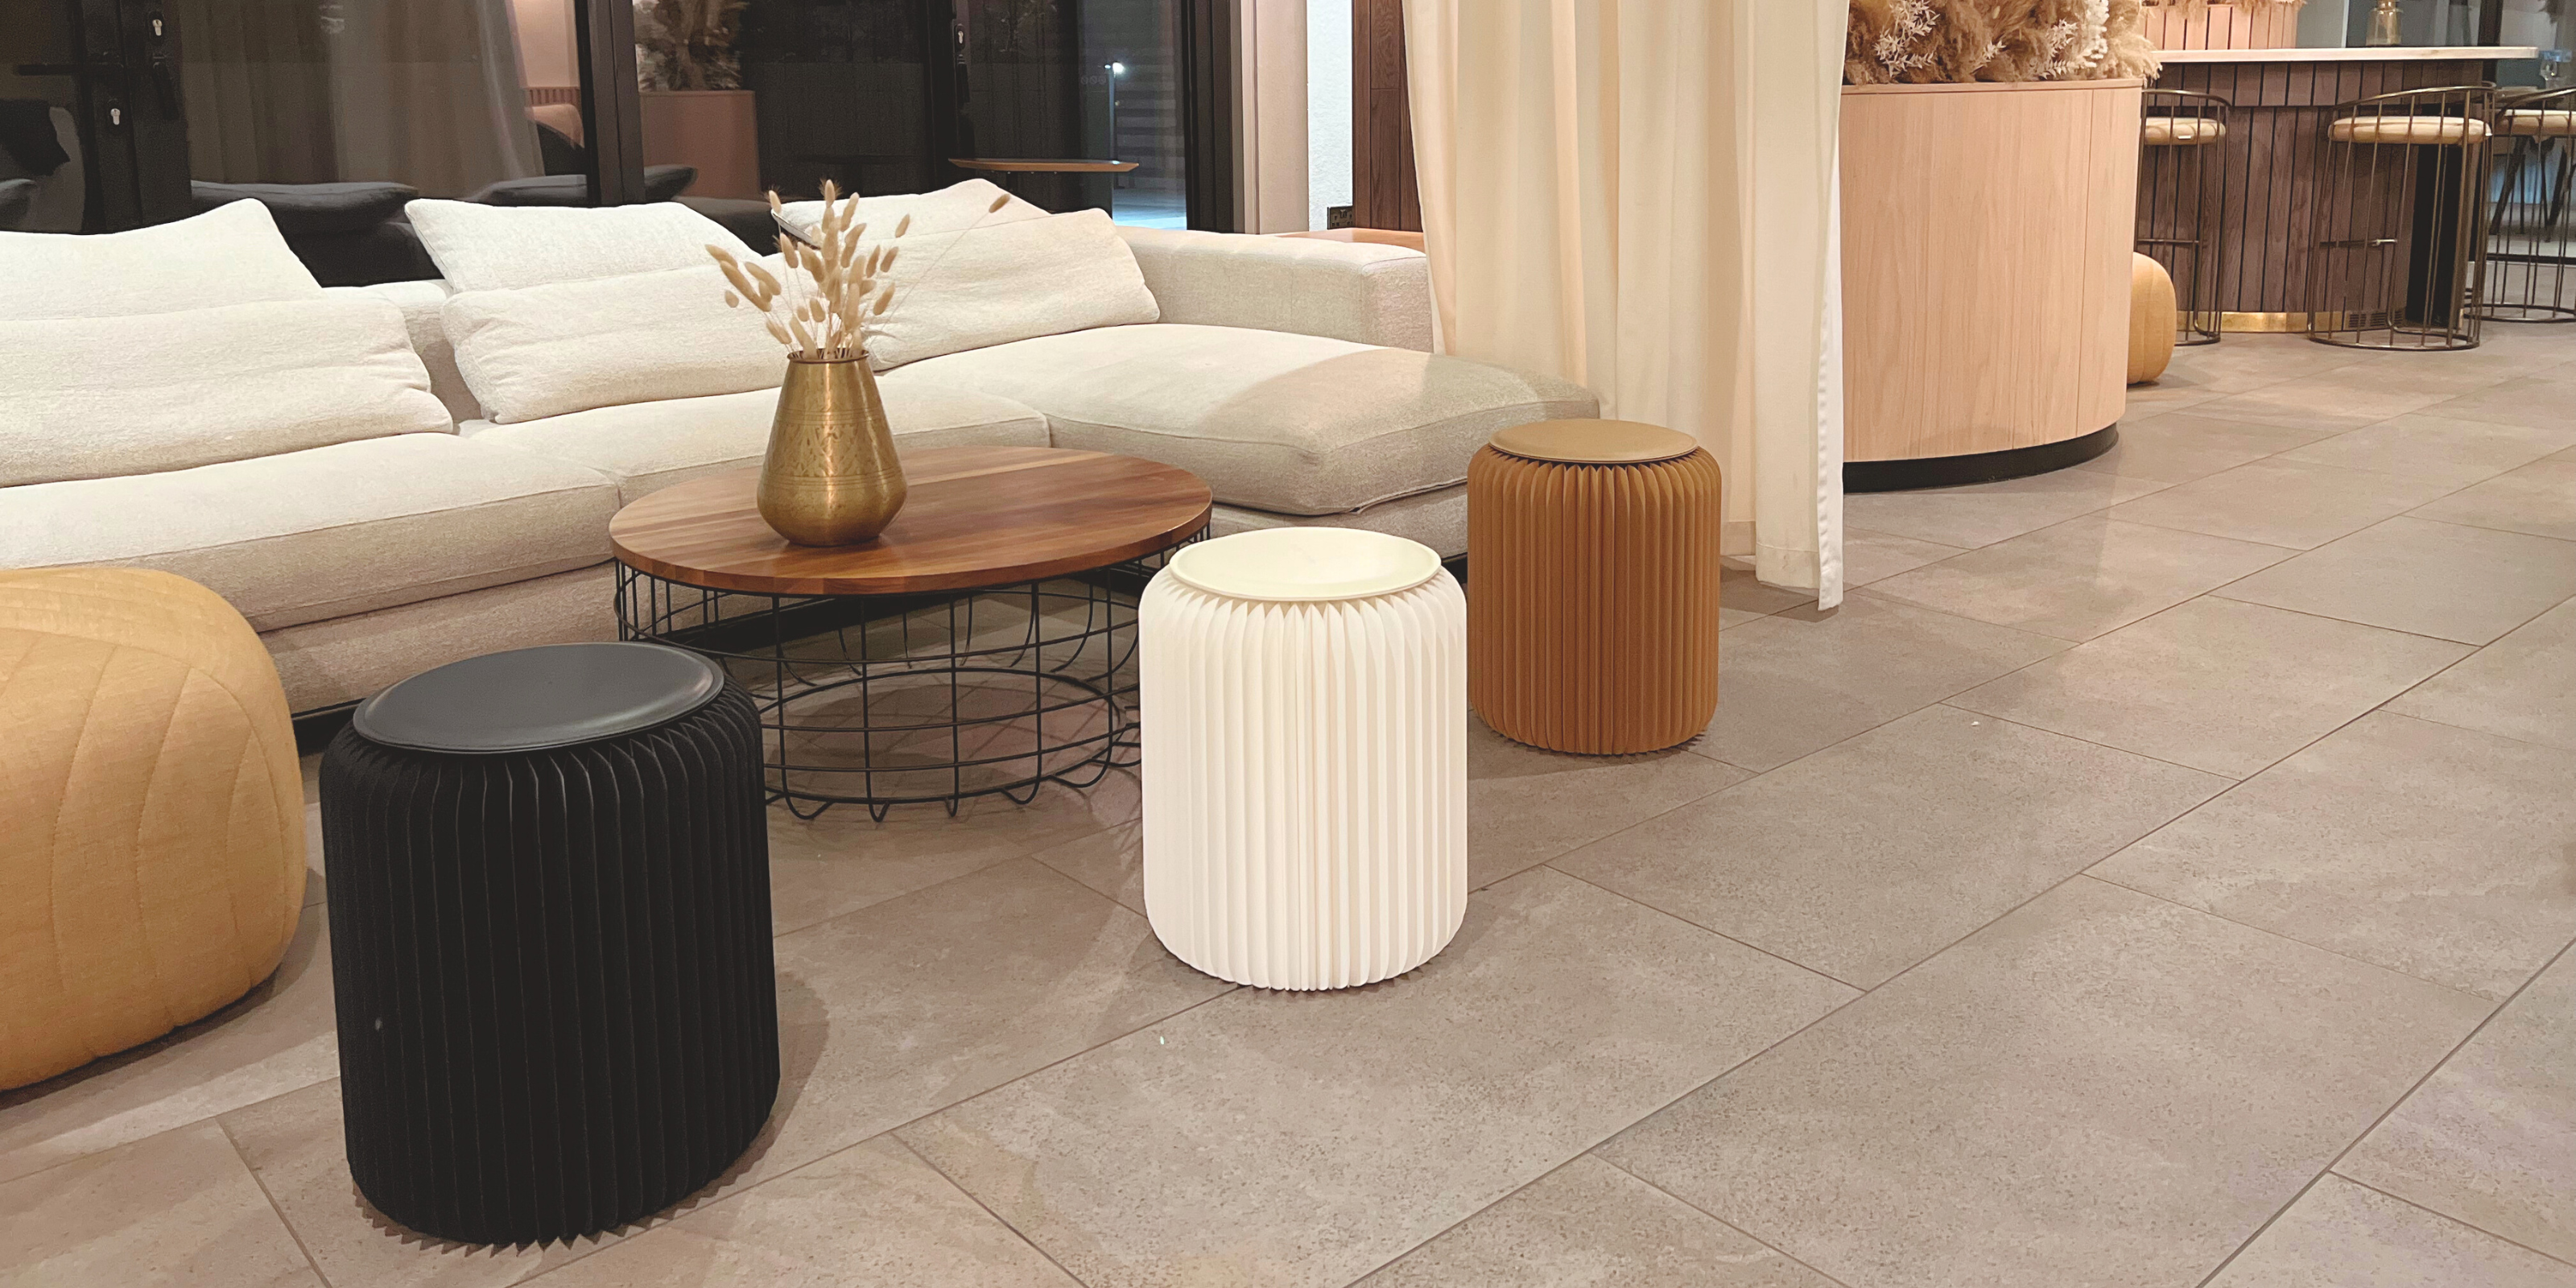 3 foldable stools minimalist elegant design black white brown lounge style